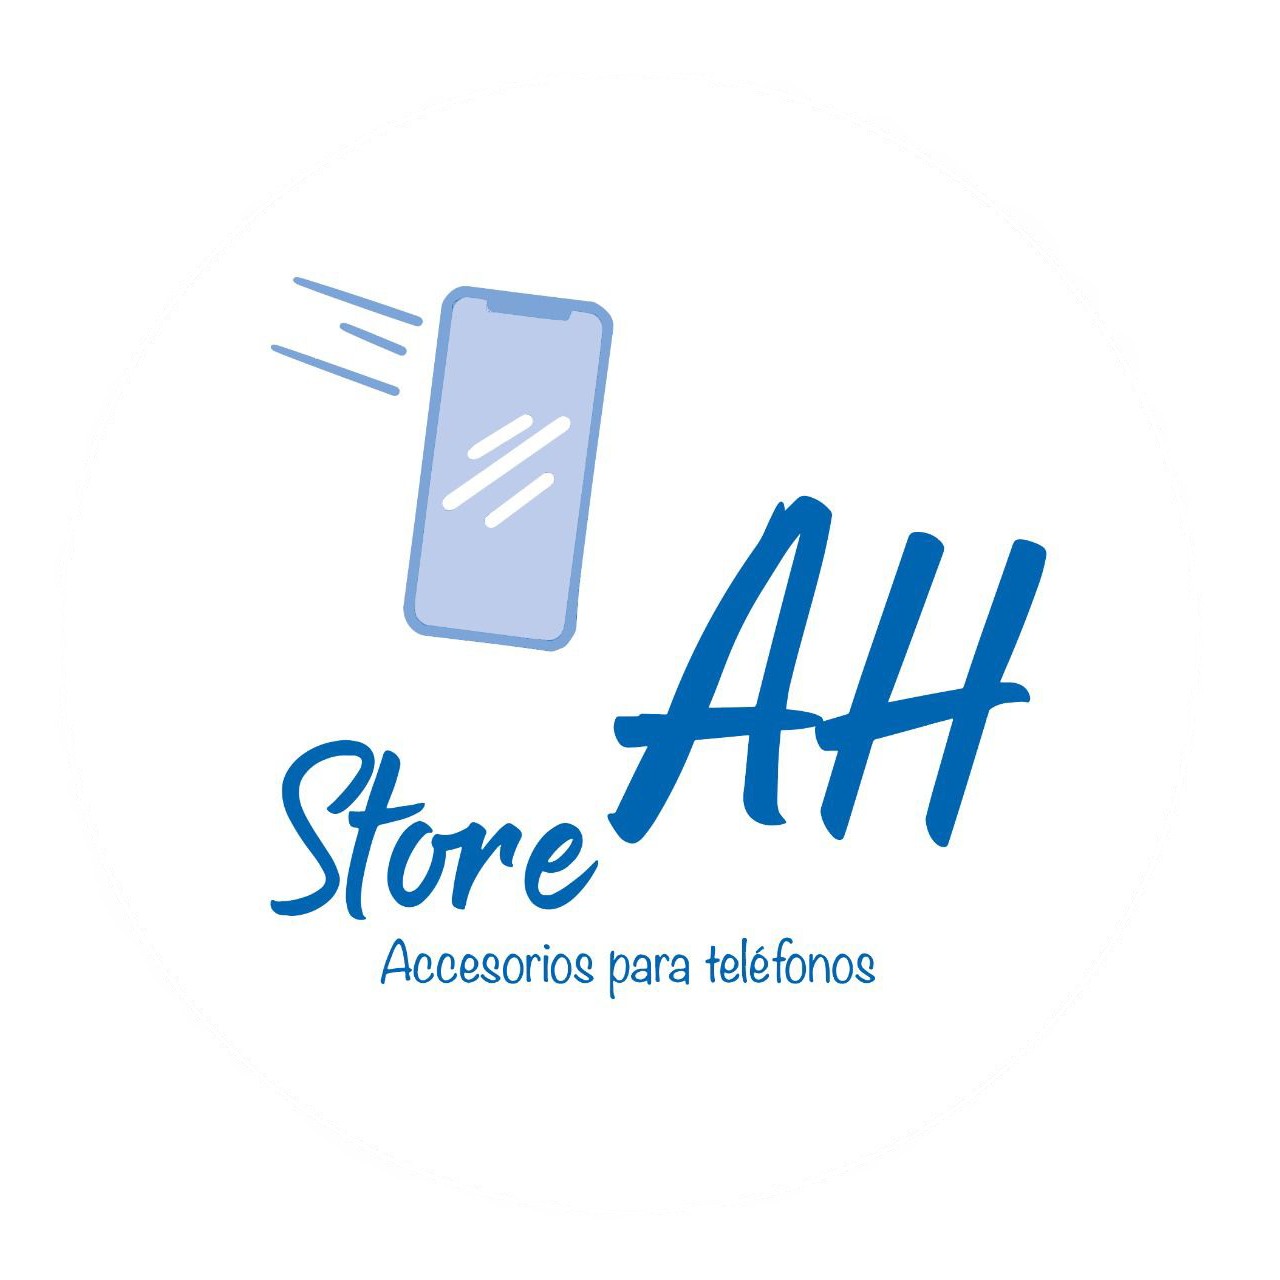 AH Store